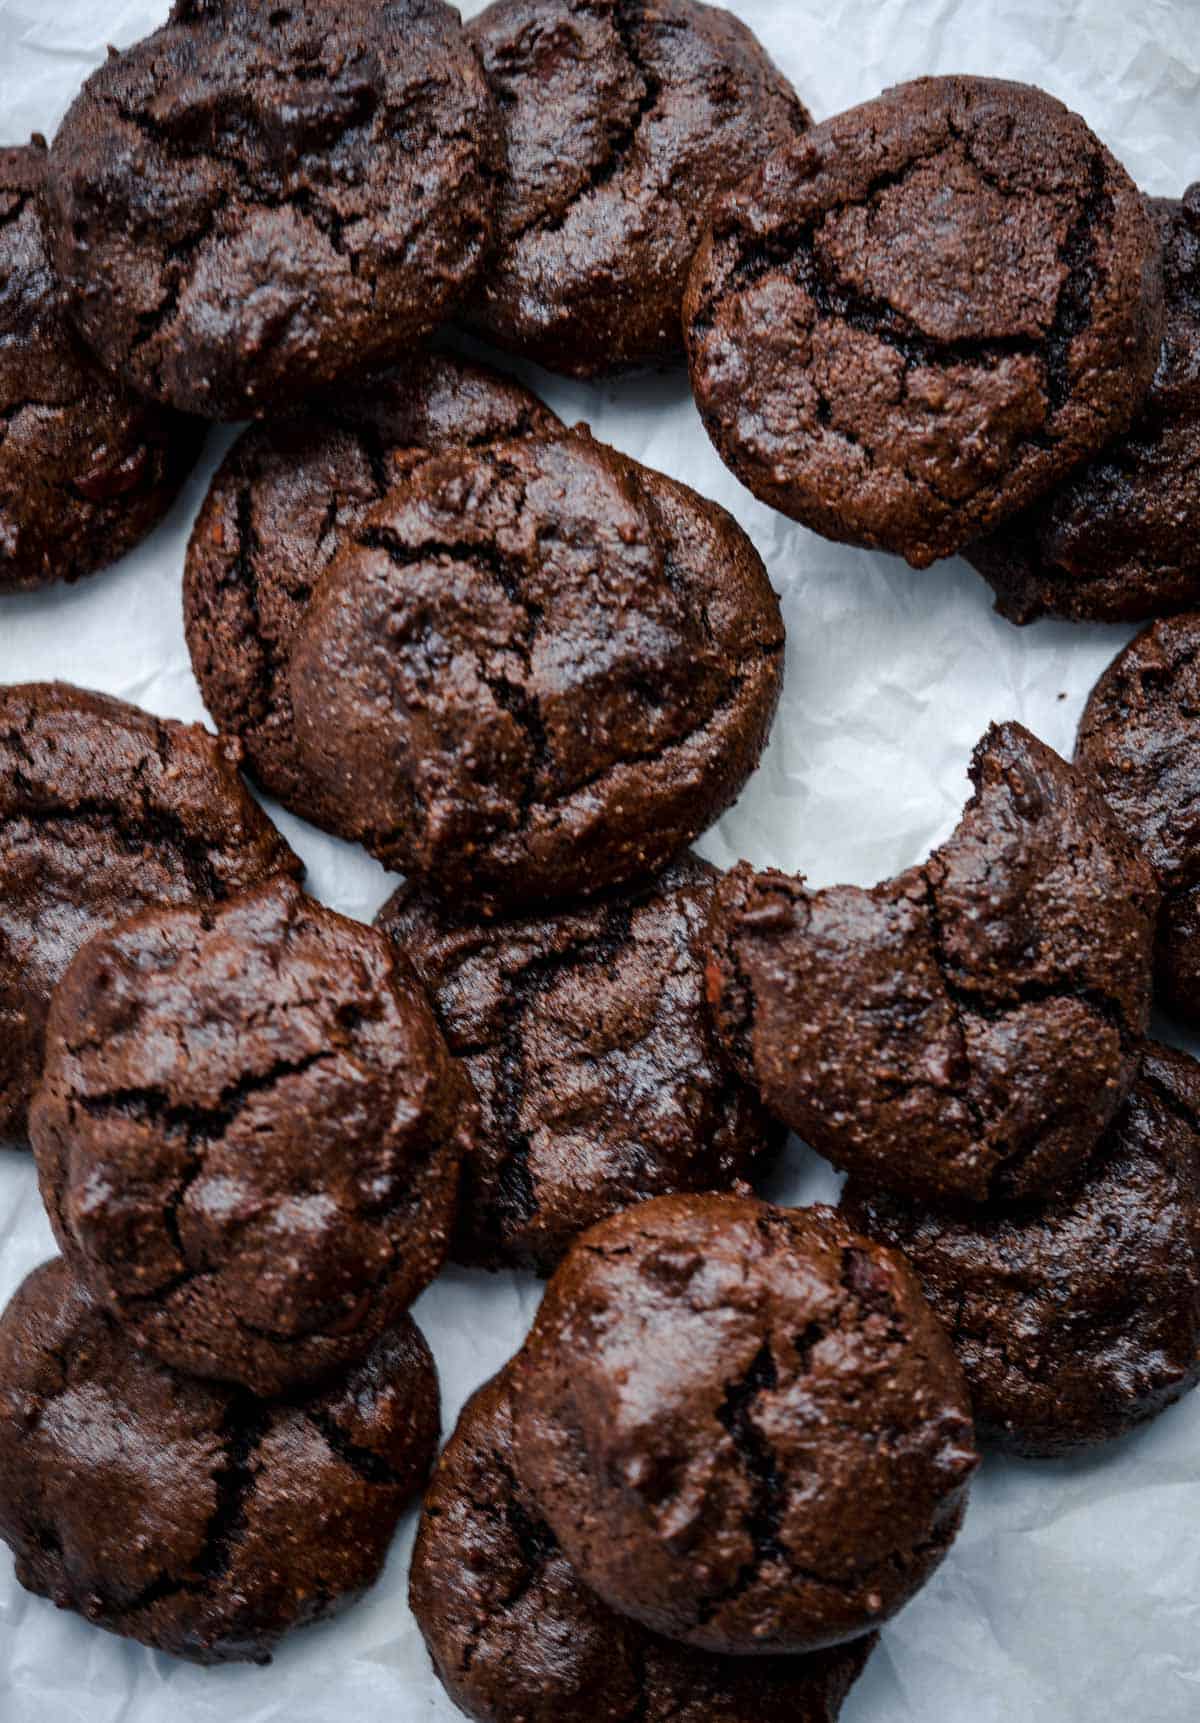 Chocolate fudge tahini cookies piled